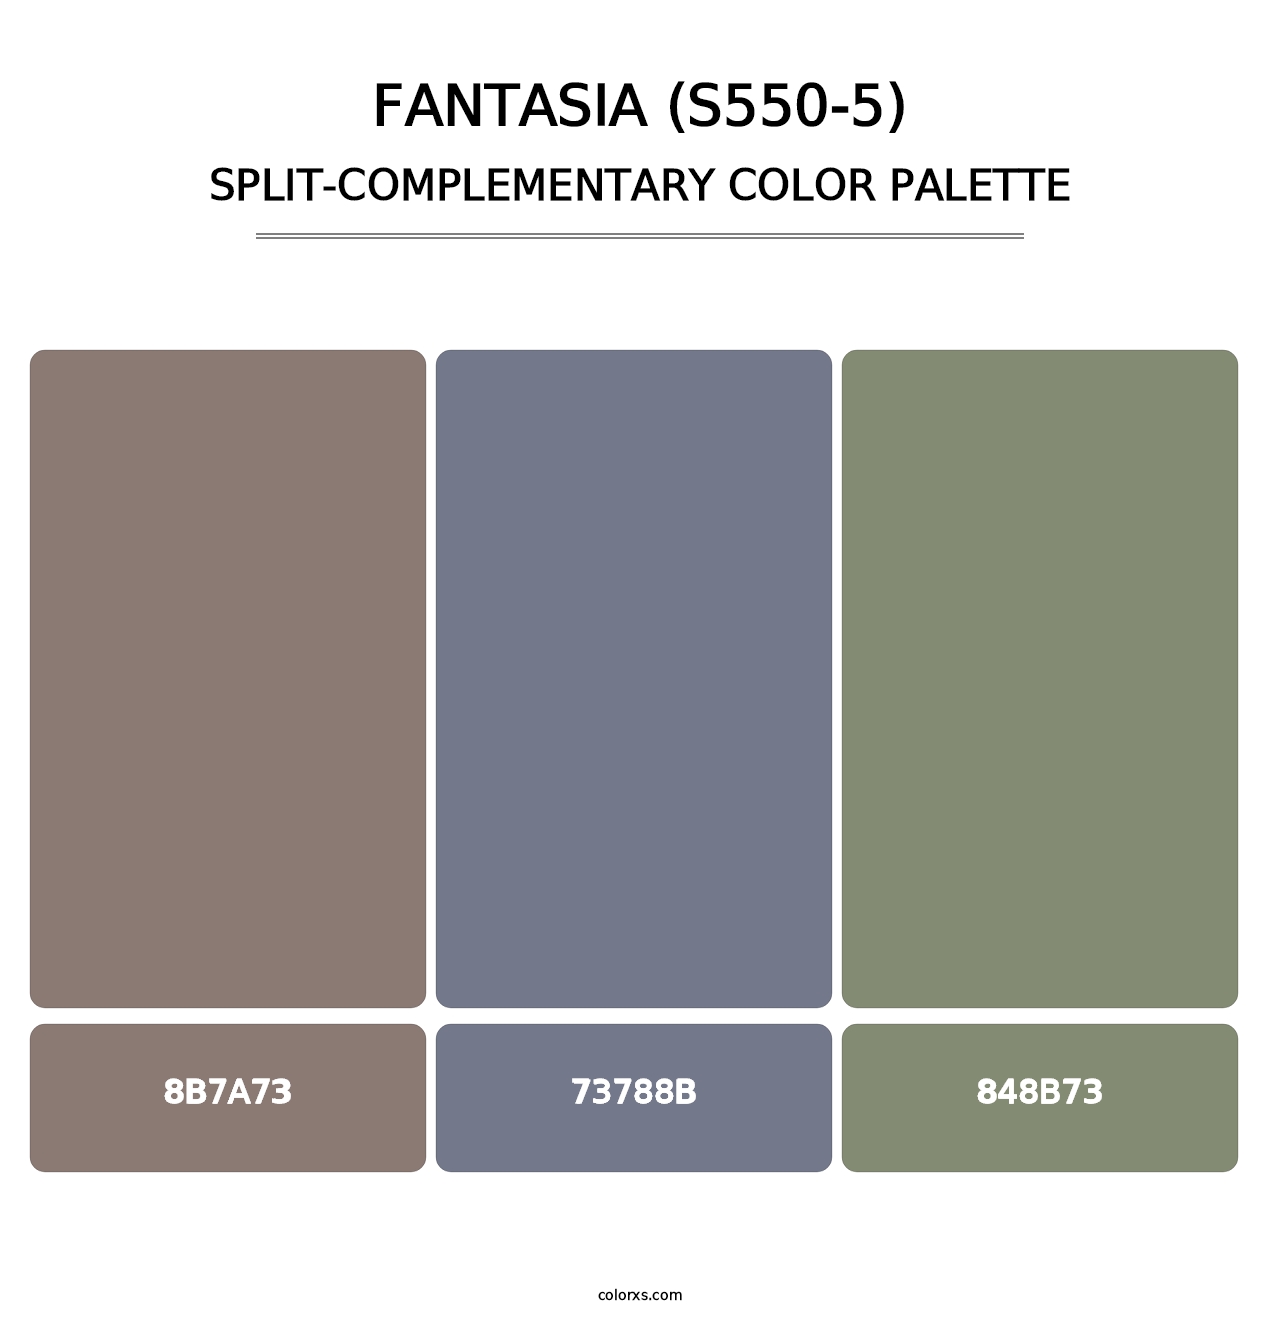 Fantasia (S550-5) - Split-Complementary Color Palette